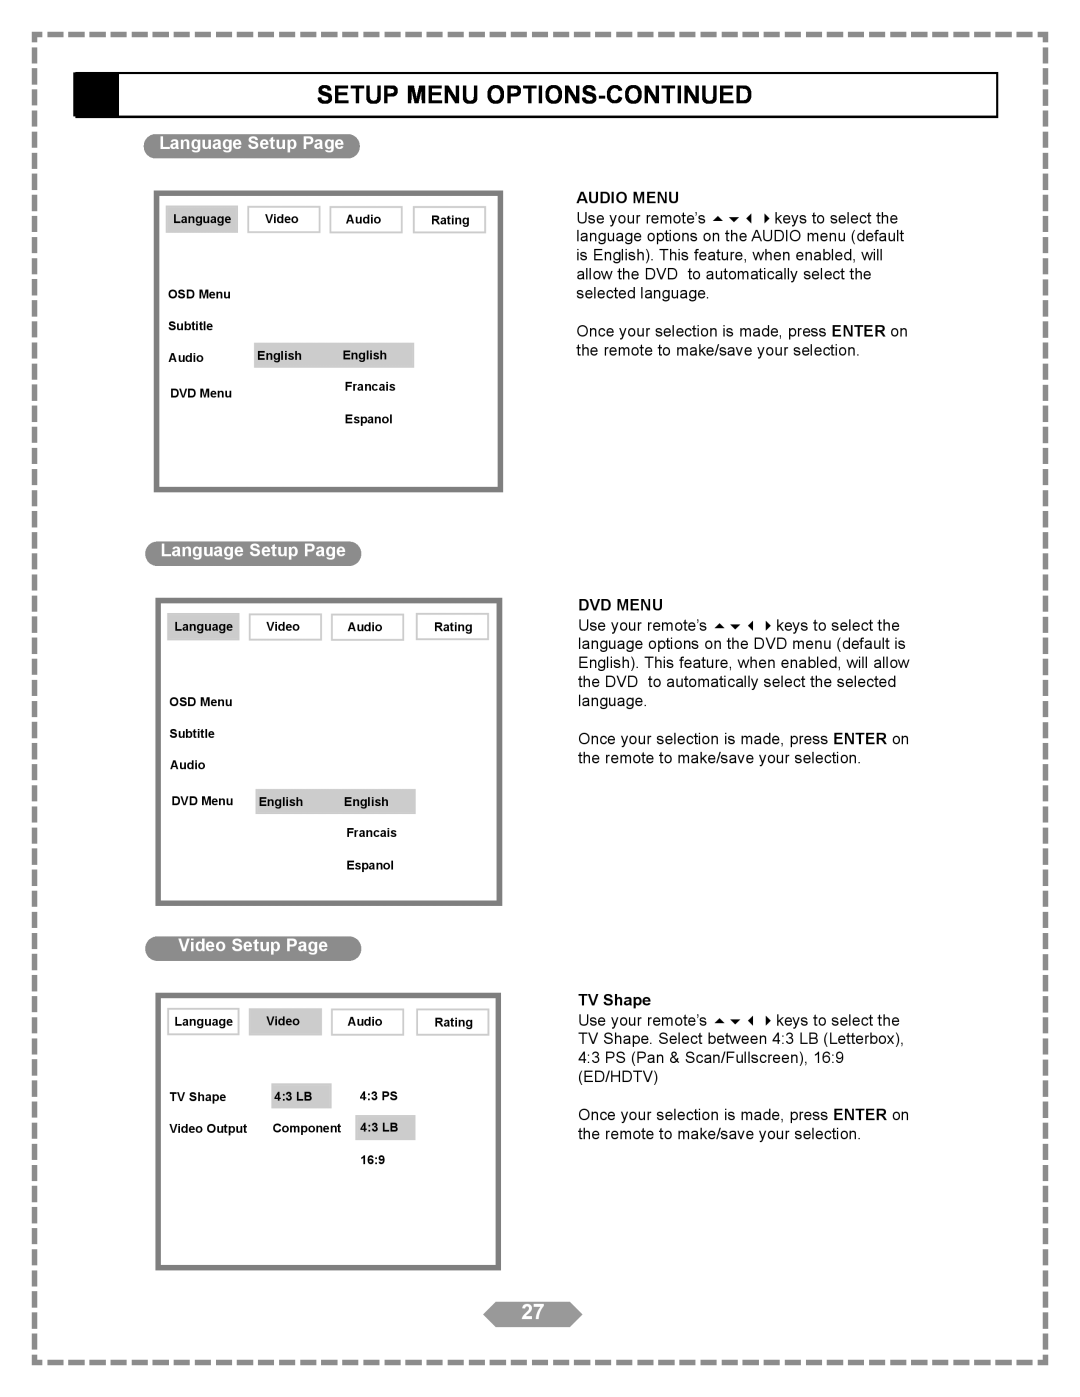 Apex Digital HT-175 manual Setup Menu Options-Continued, Language Setup Page, Video Setup Page, General Setup Page 